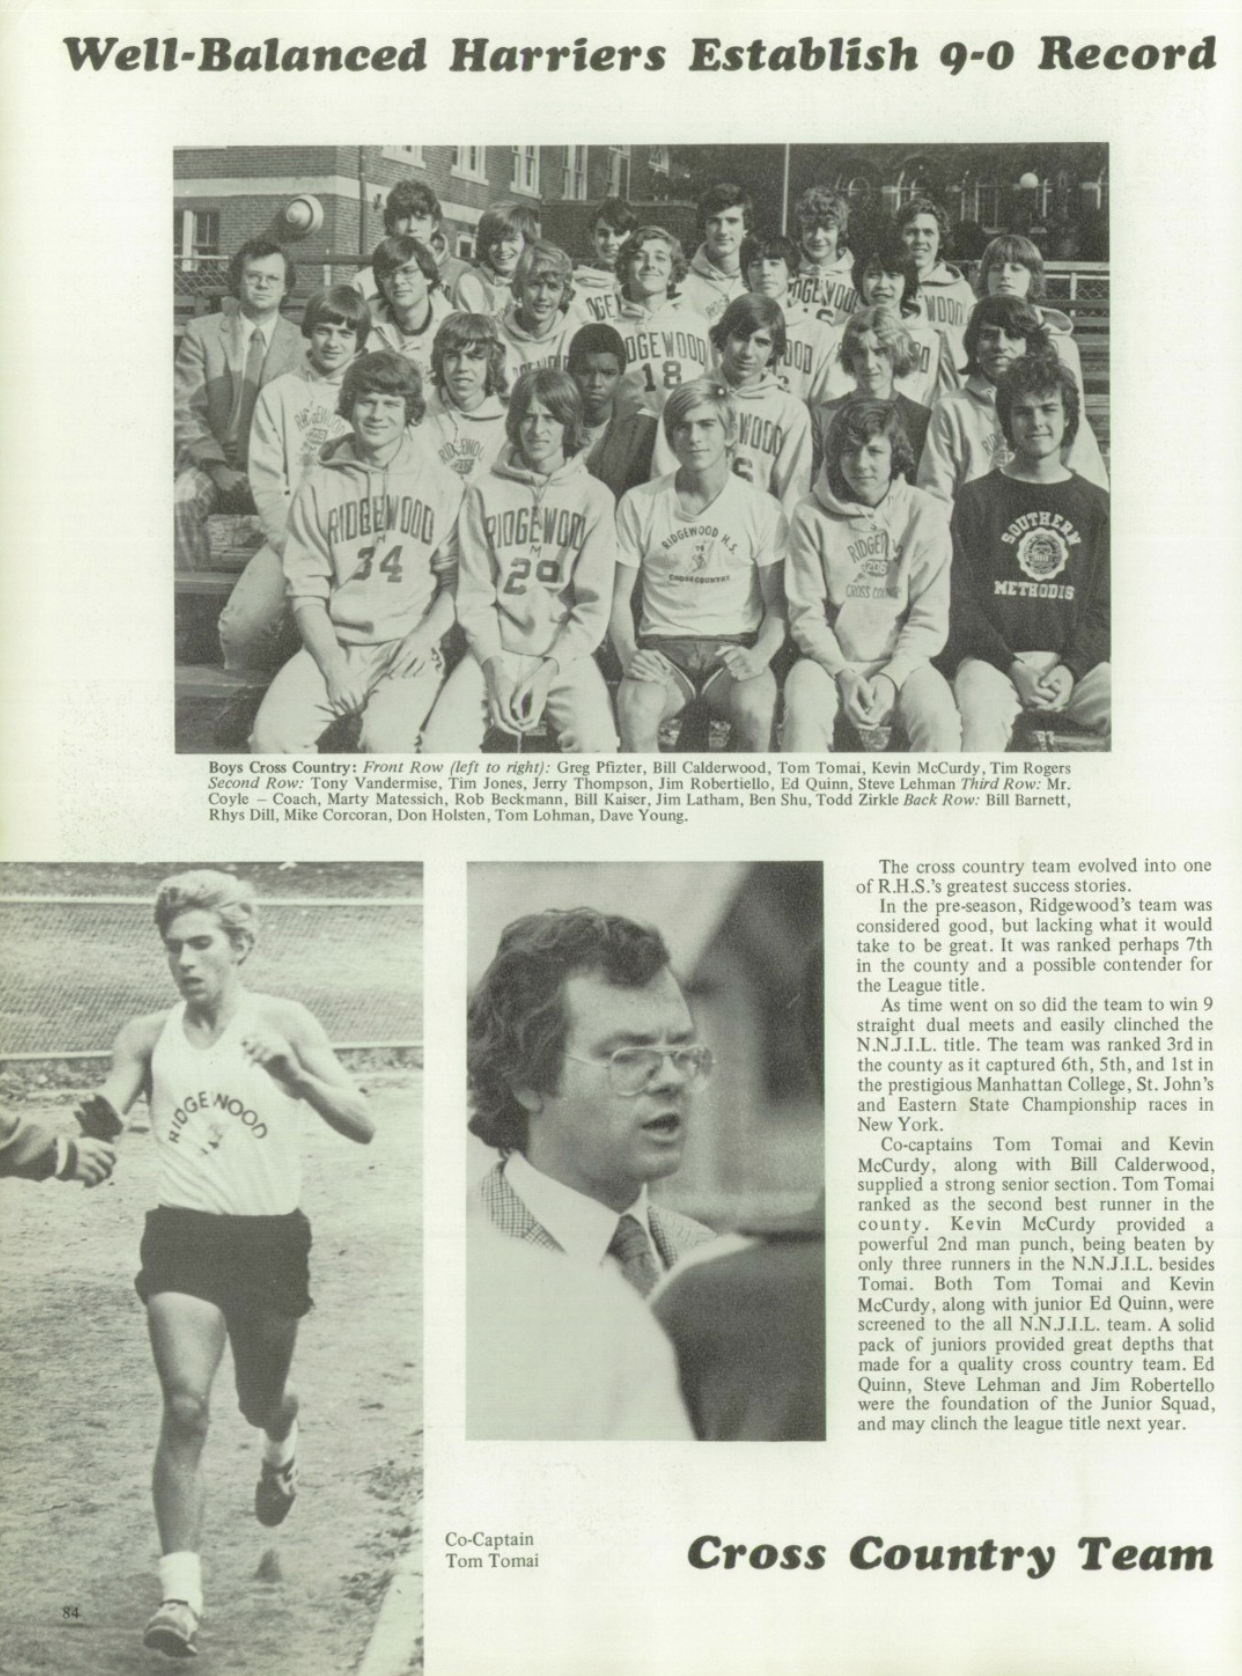 1974 Boys’ Cross Country Team